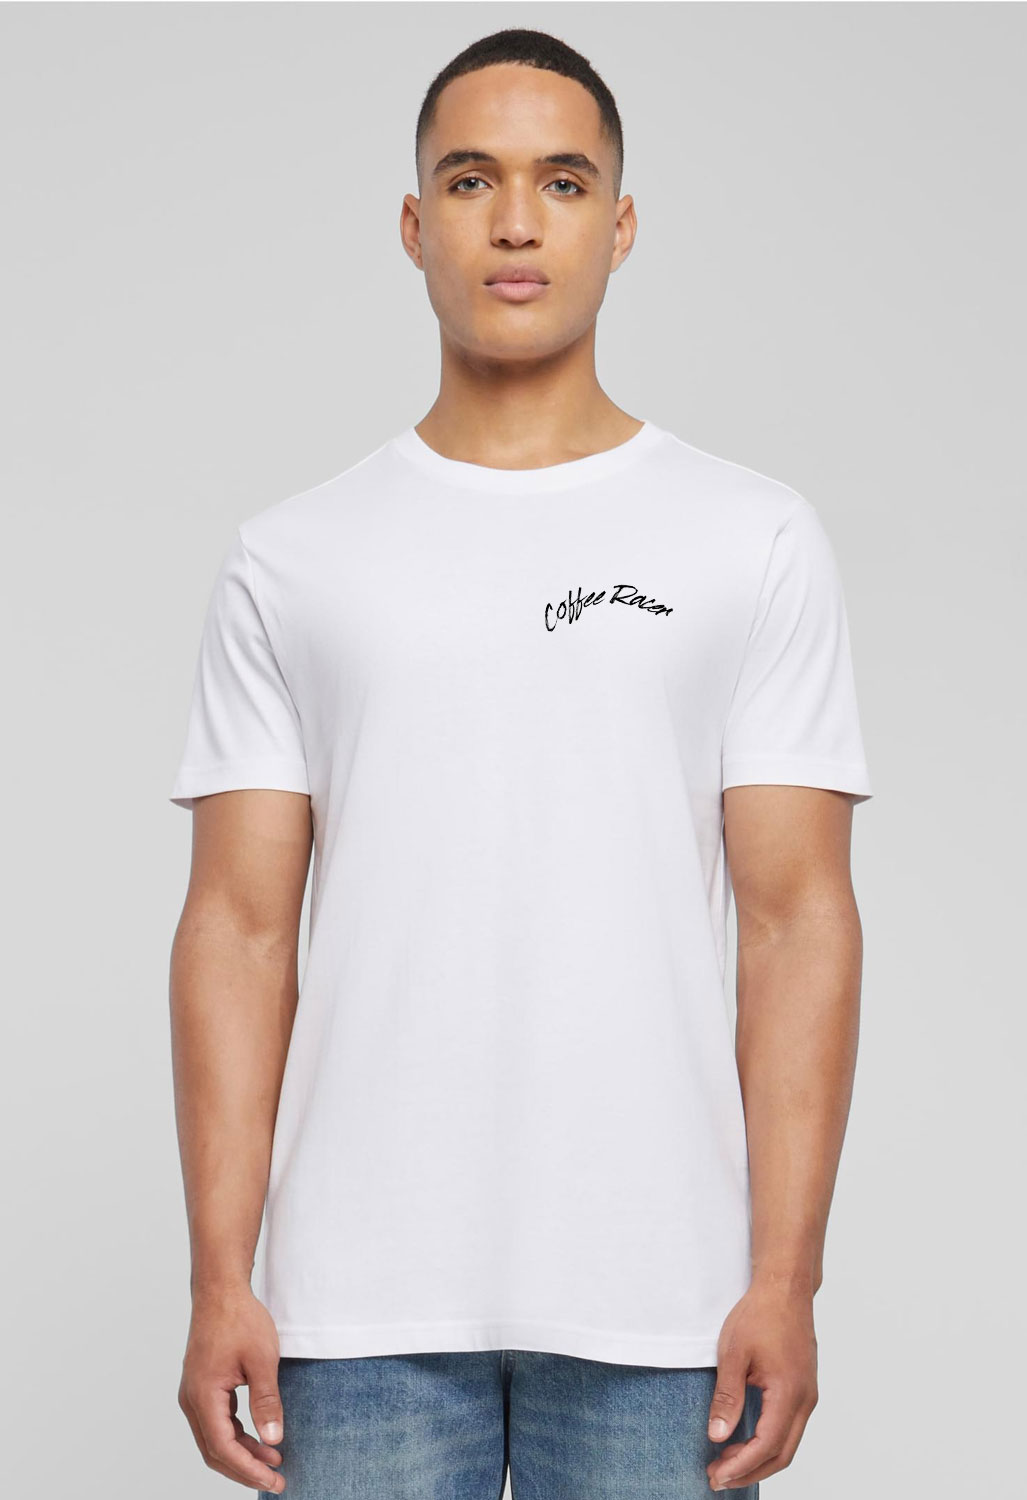 OV-Style CoffeeRacer Shirt White